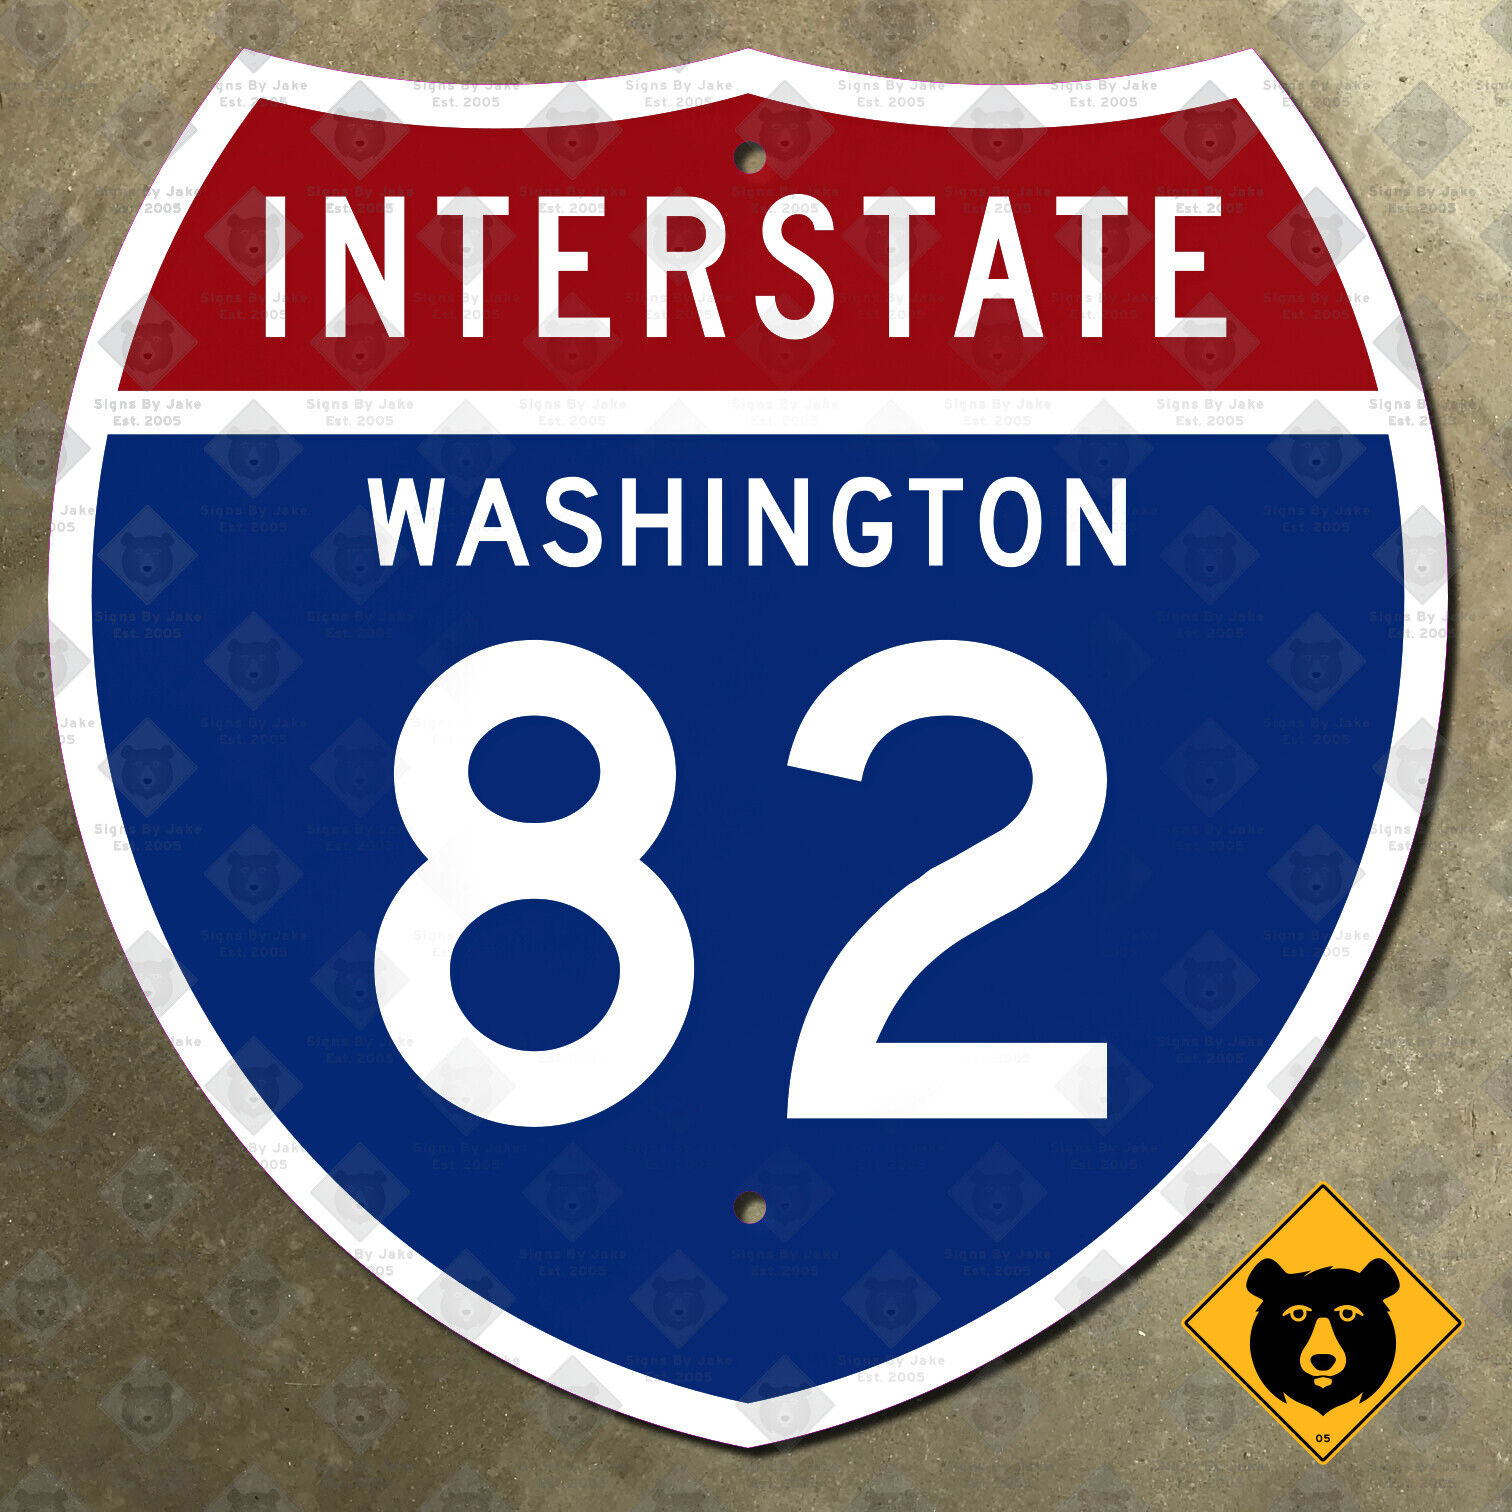 Washington Interstate 82 highway route sign shield 1957 Yakima Kennewick 18x18